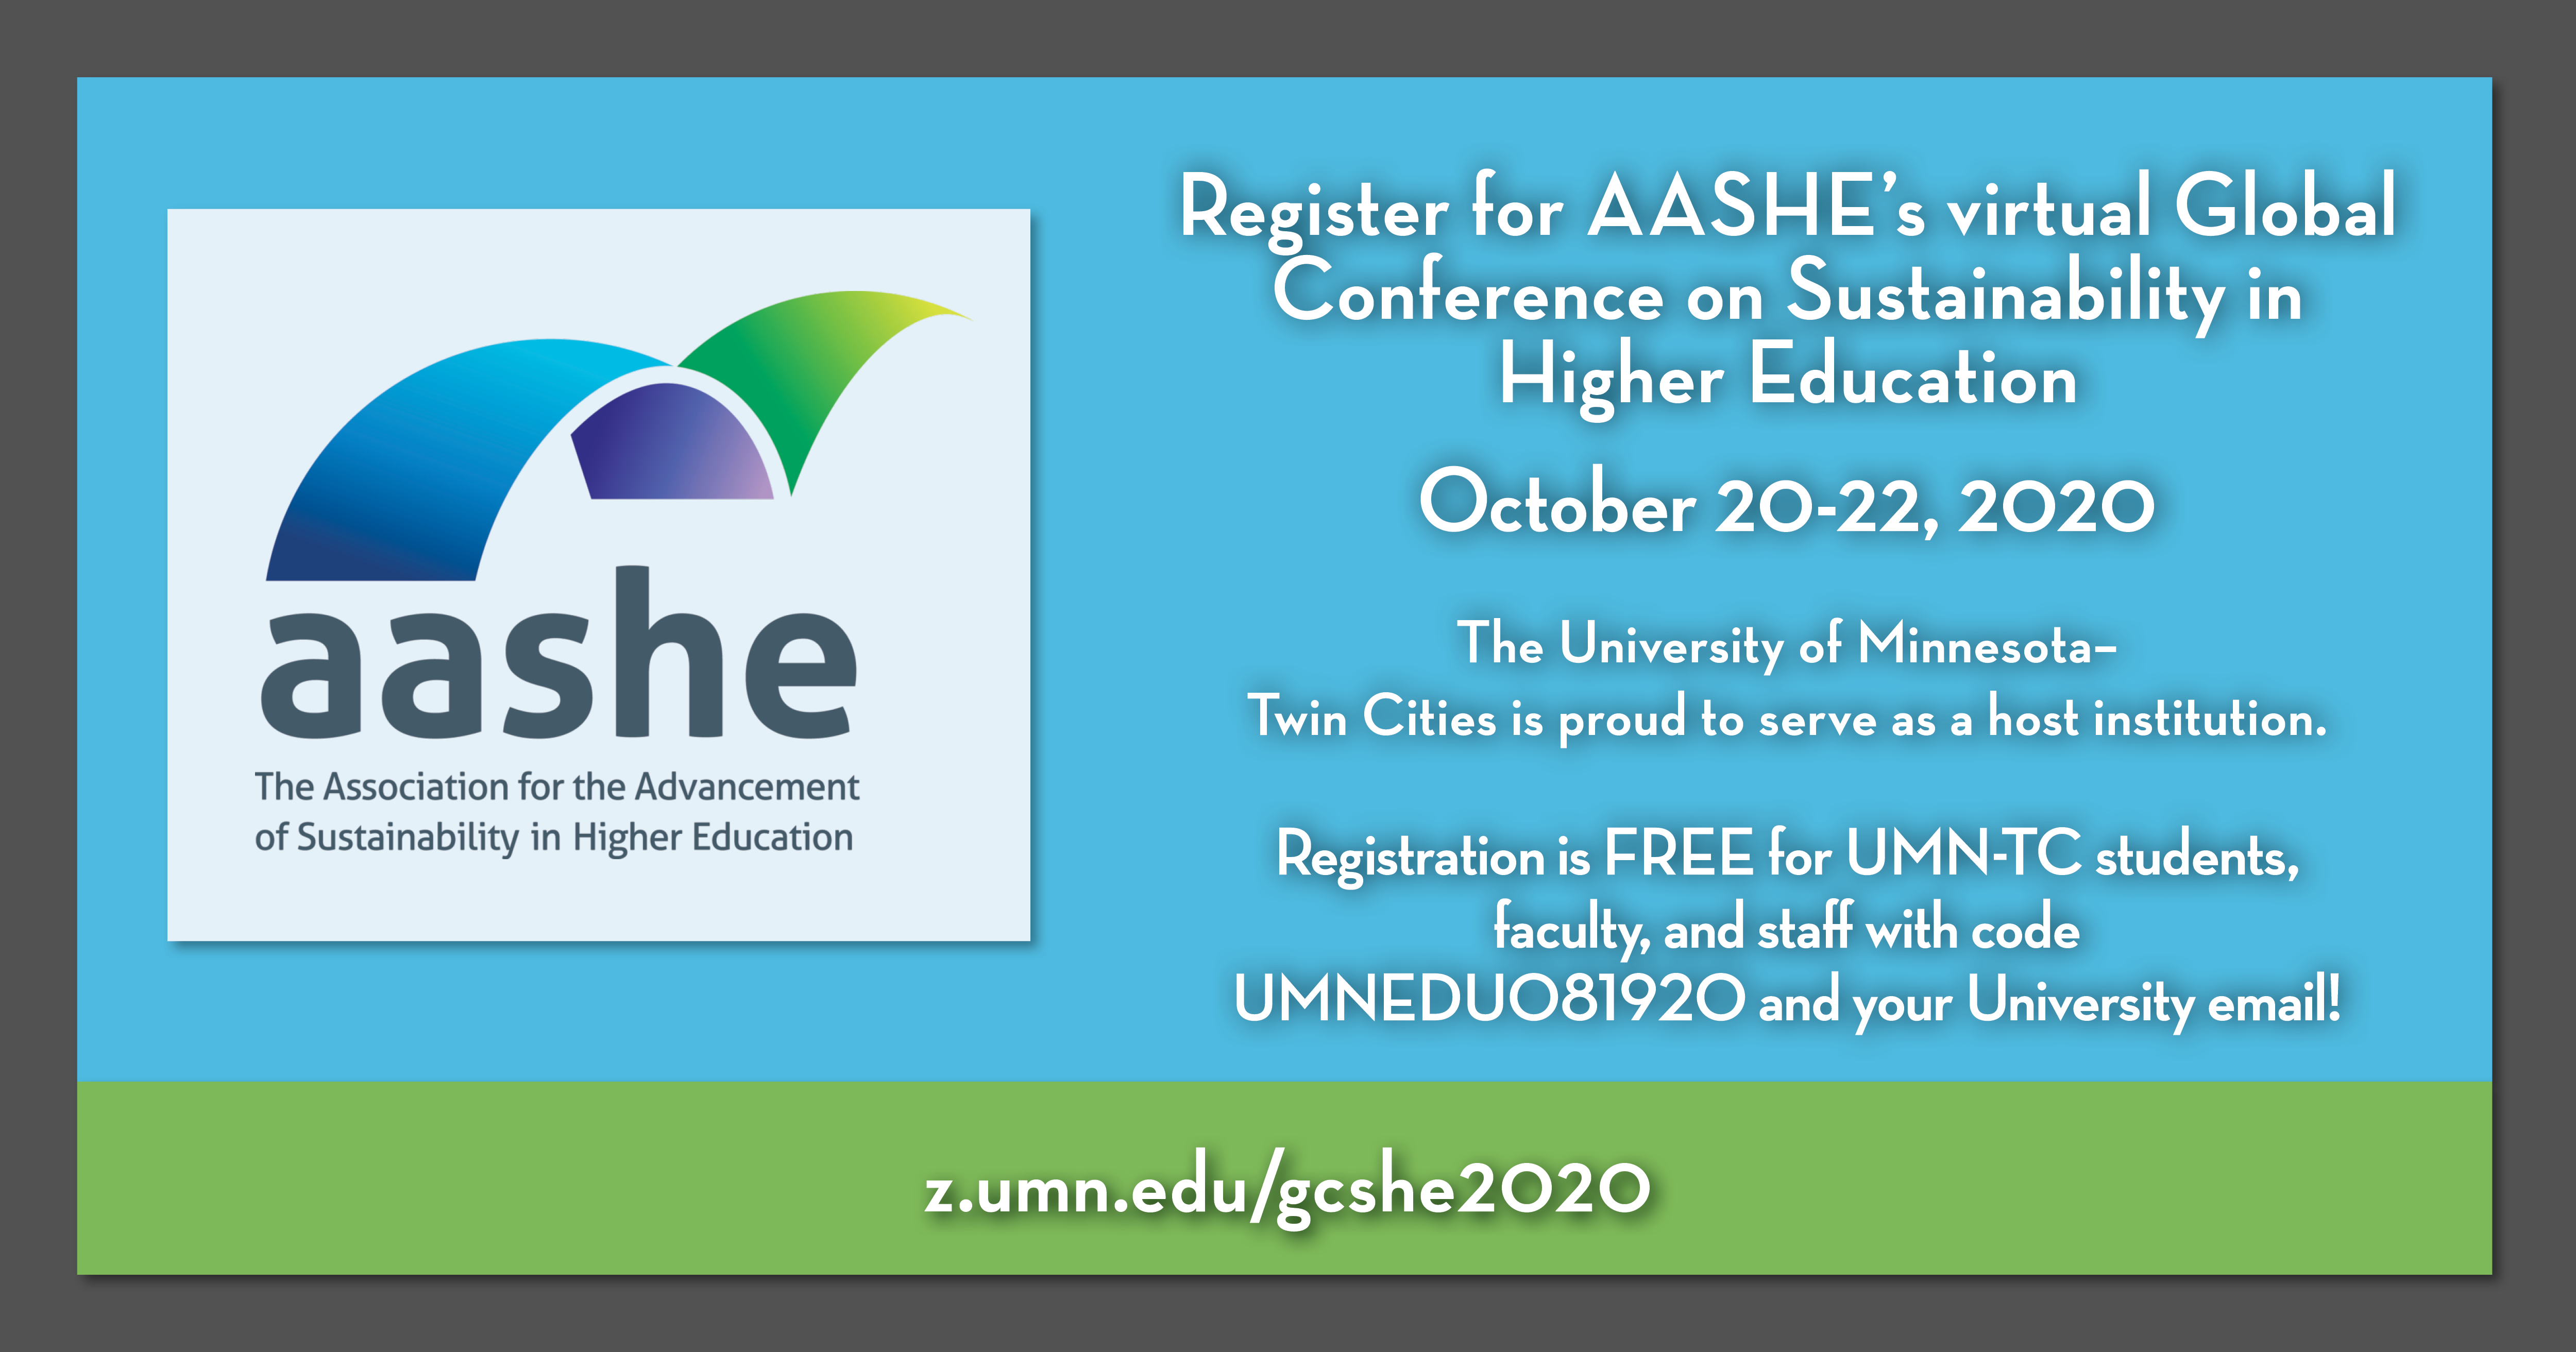 aashe virtual global sustainability conference